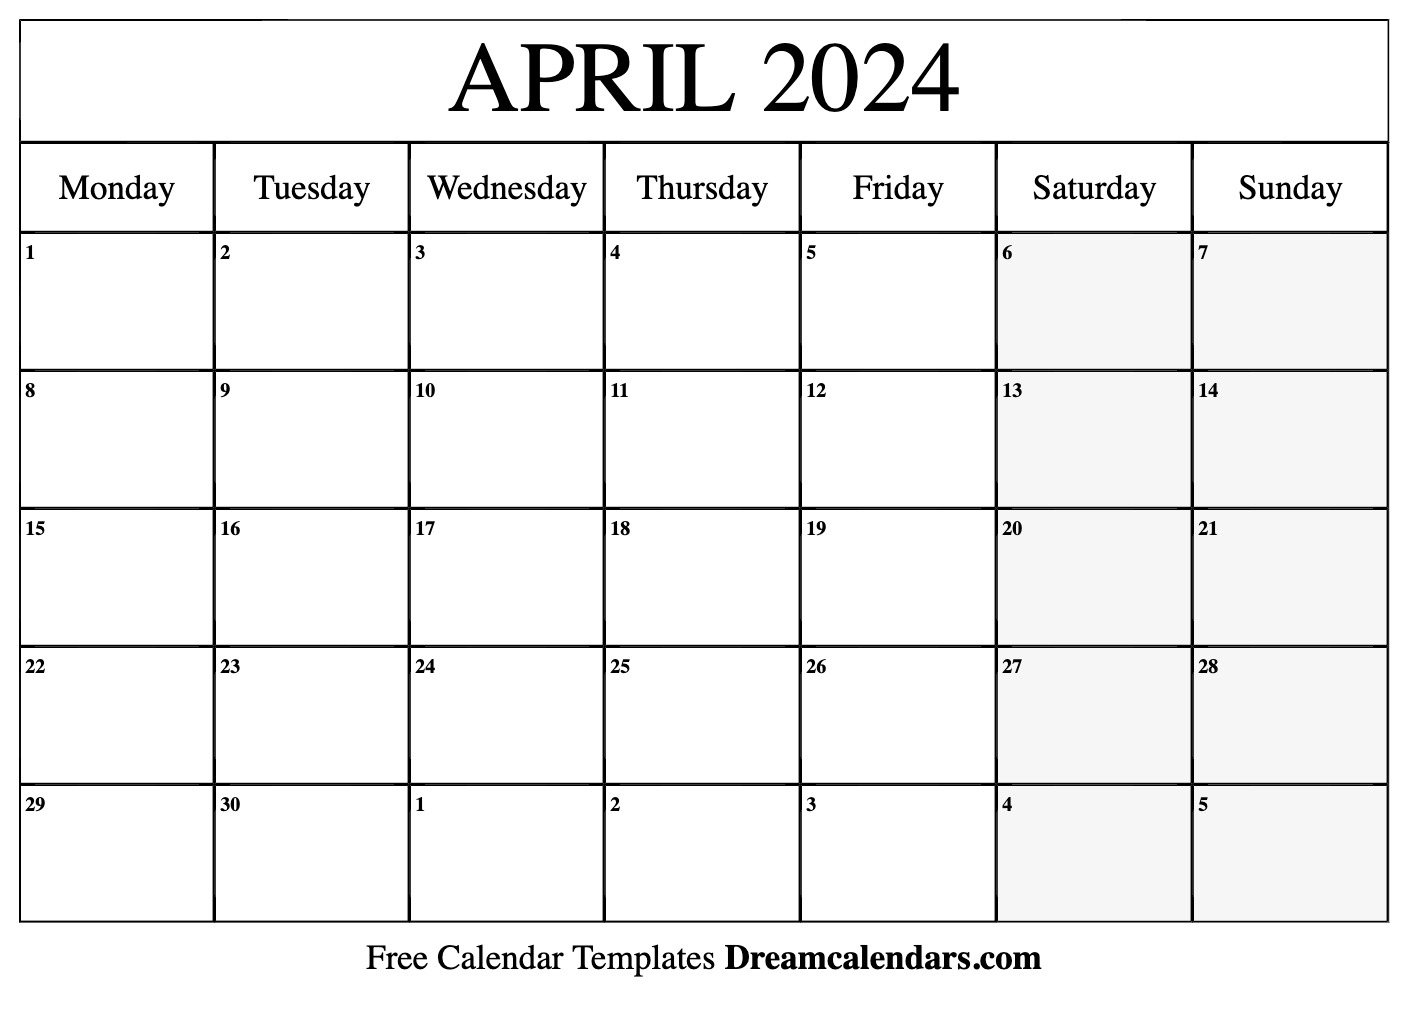 April 2024 Calendar | Free Blank Printable With Holidays for Blank Calendar April 2024 Printable